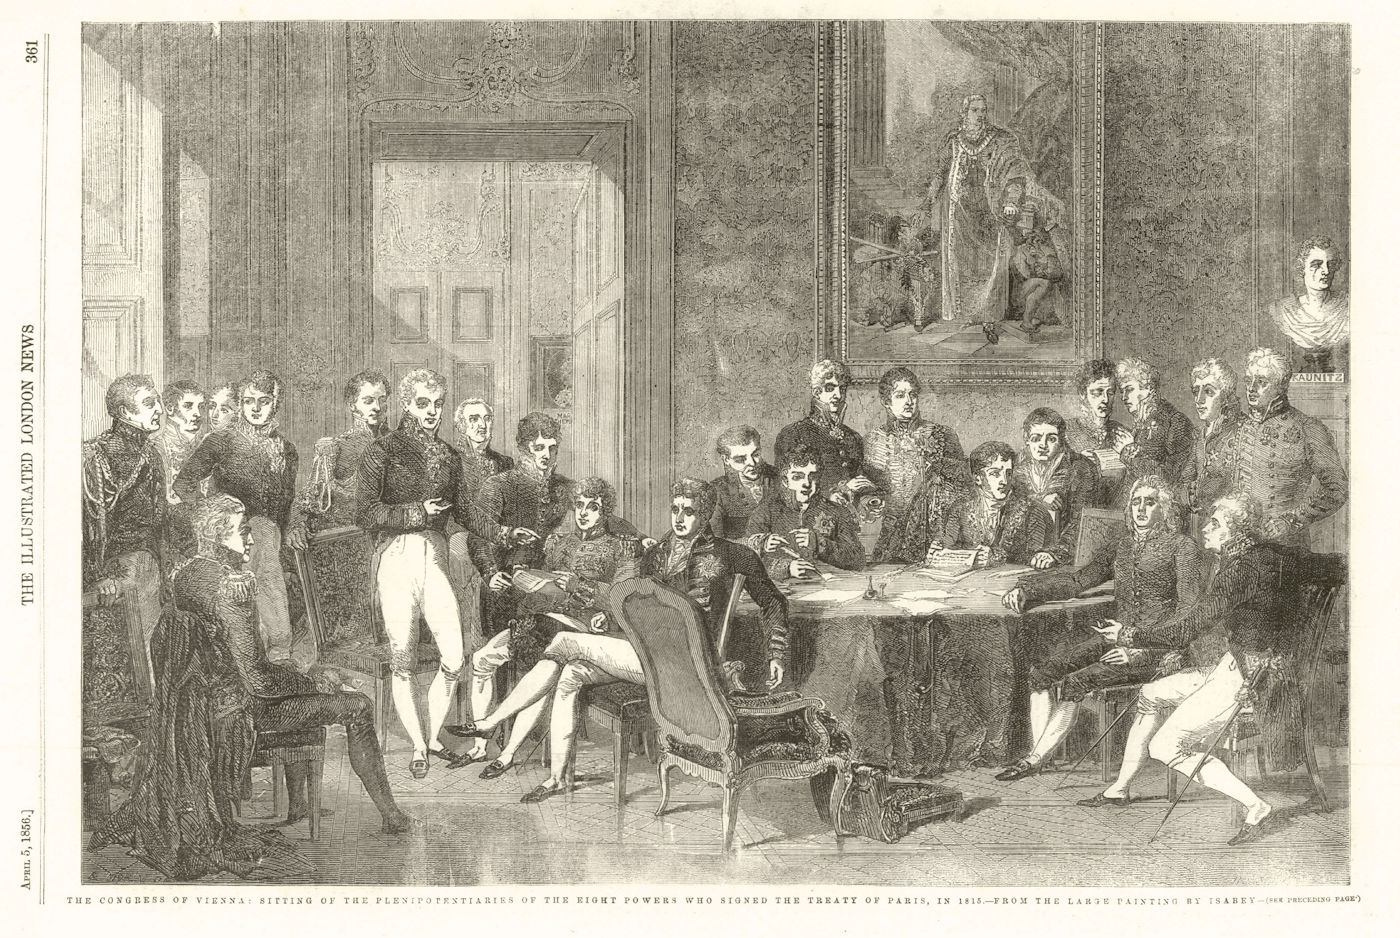 Associate Product Congress of Vienna: Plenipotentiaries 8 powers sitting Treaty of Paris 1815 1856